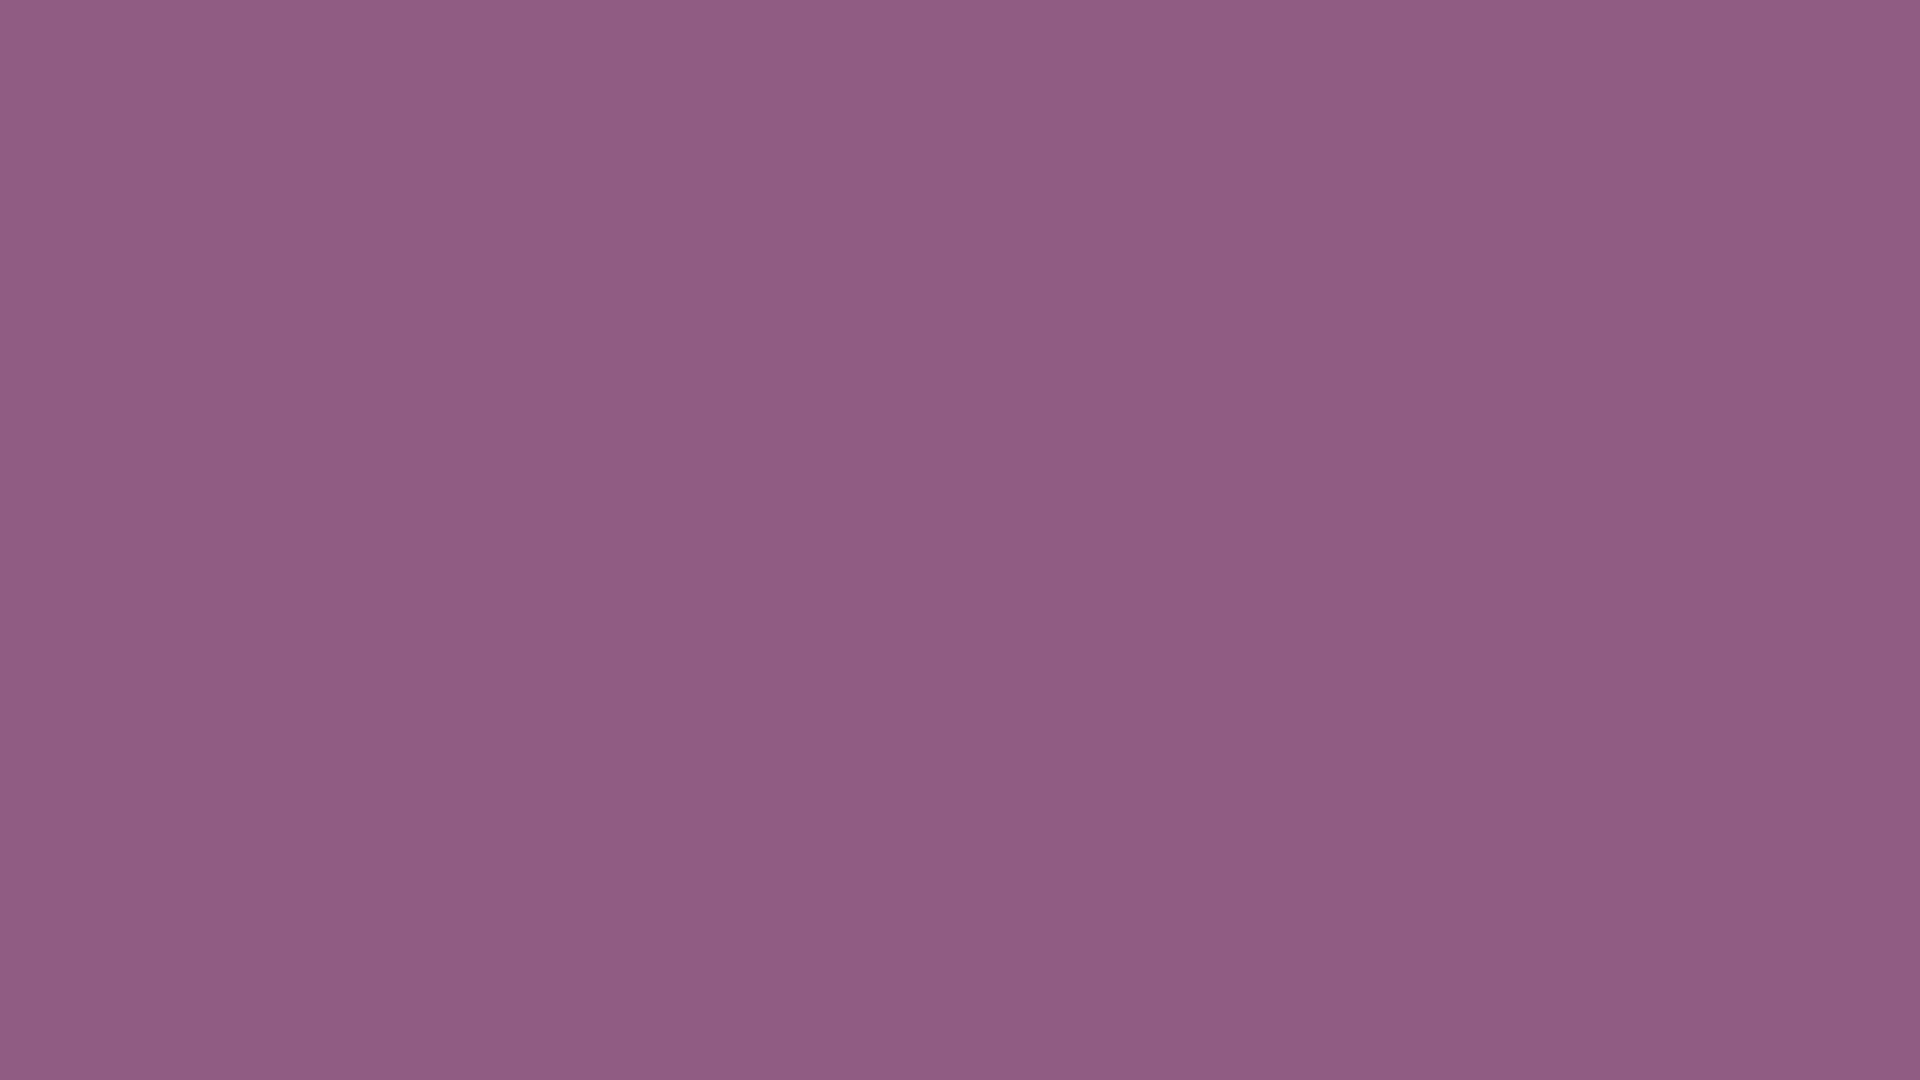 1920x1080 Antique Fuchsia Solid Color Background